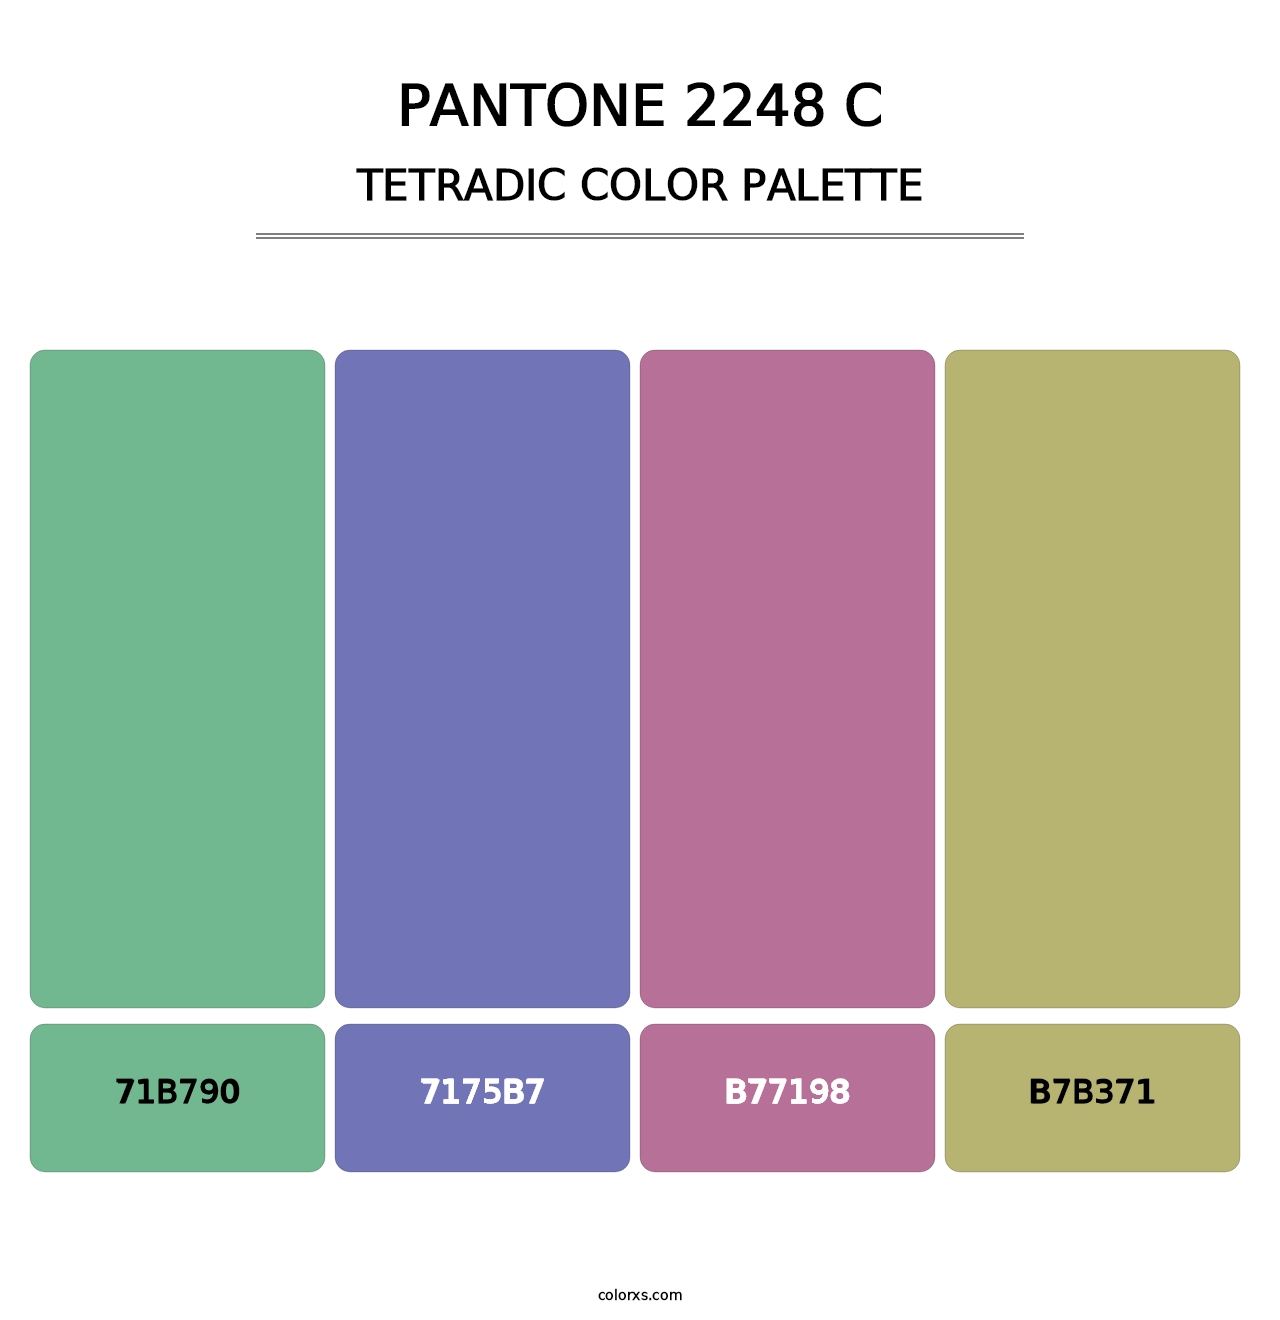 PANTONE 2248 C - Tetradic Color Palette